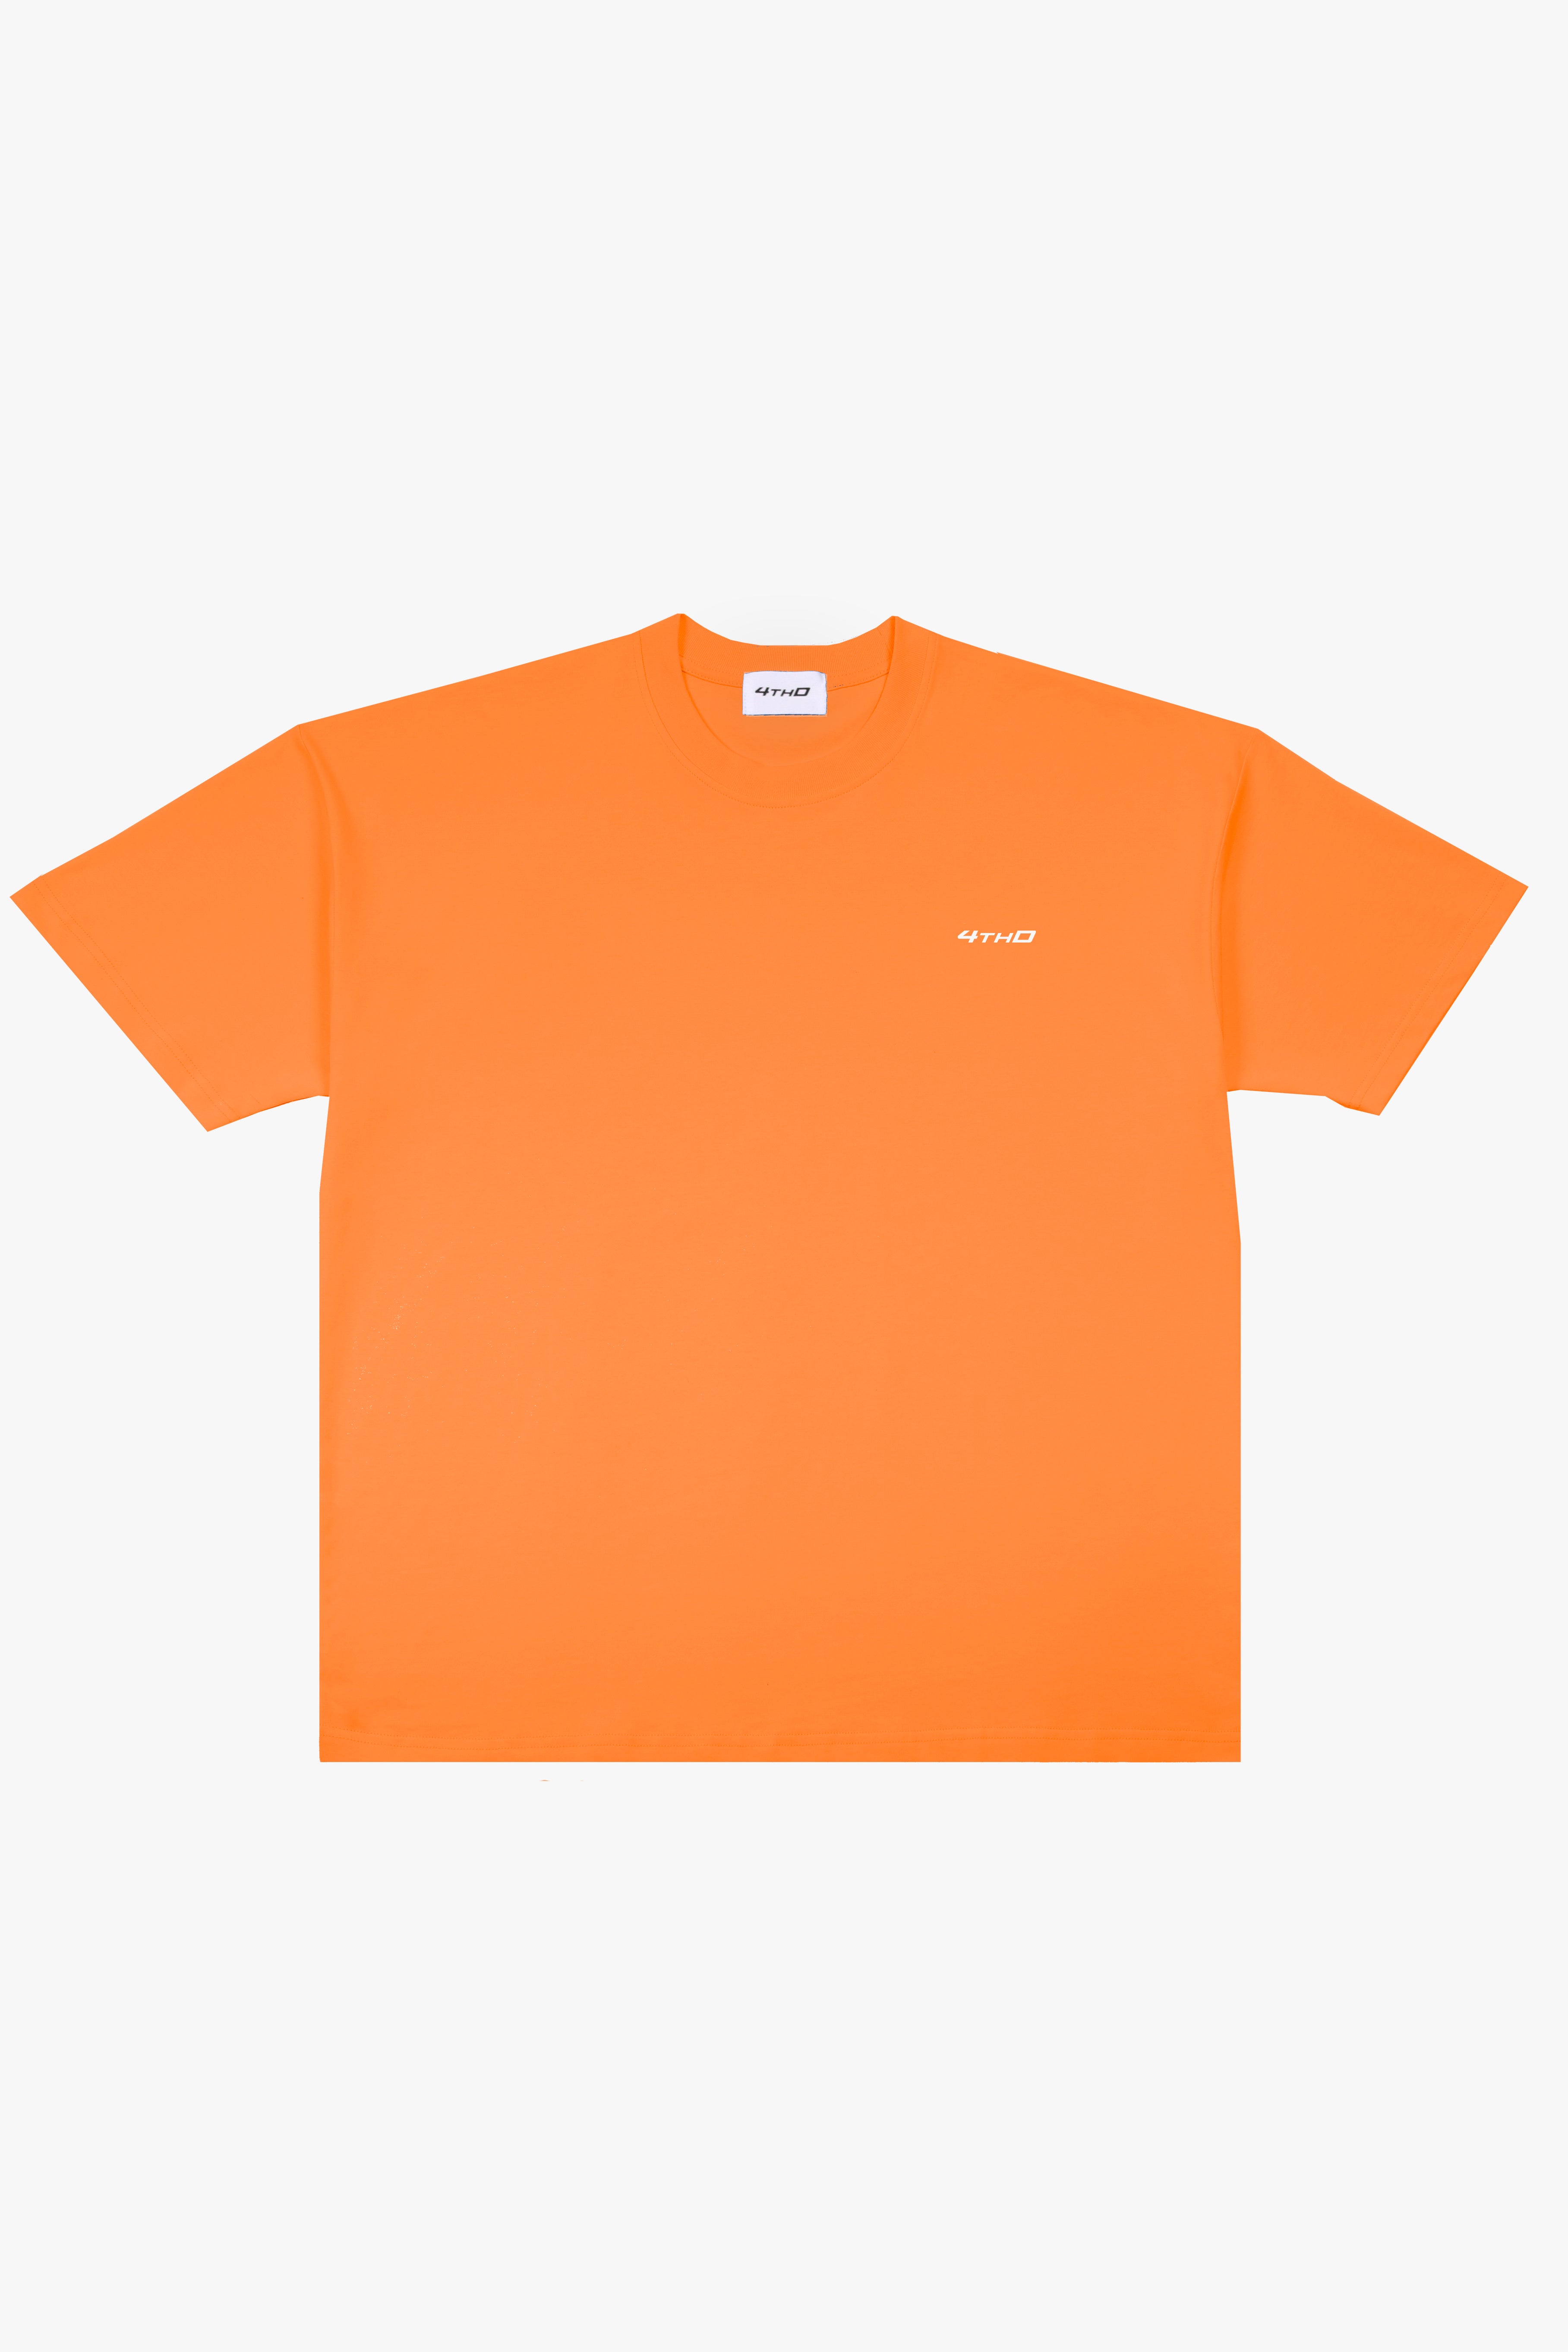 Pantone Shirt - Orange